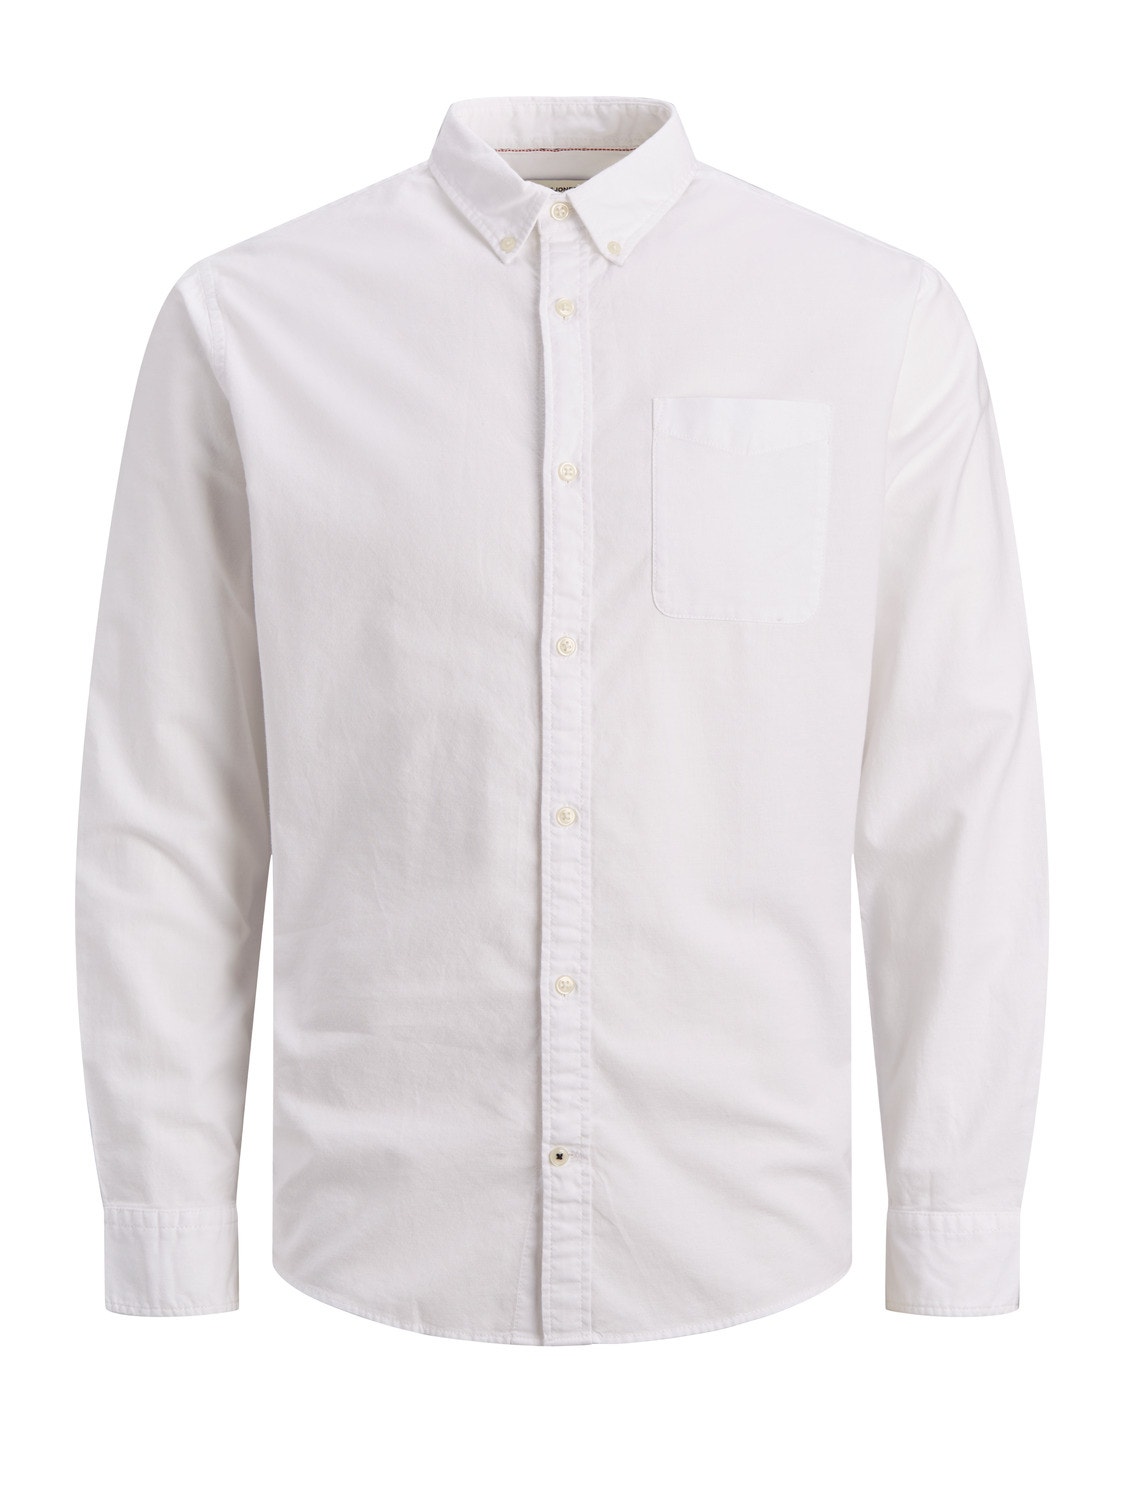 Jack & Jones Plus Slim Fit Casual shirt -White - 12190444